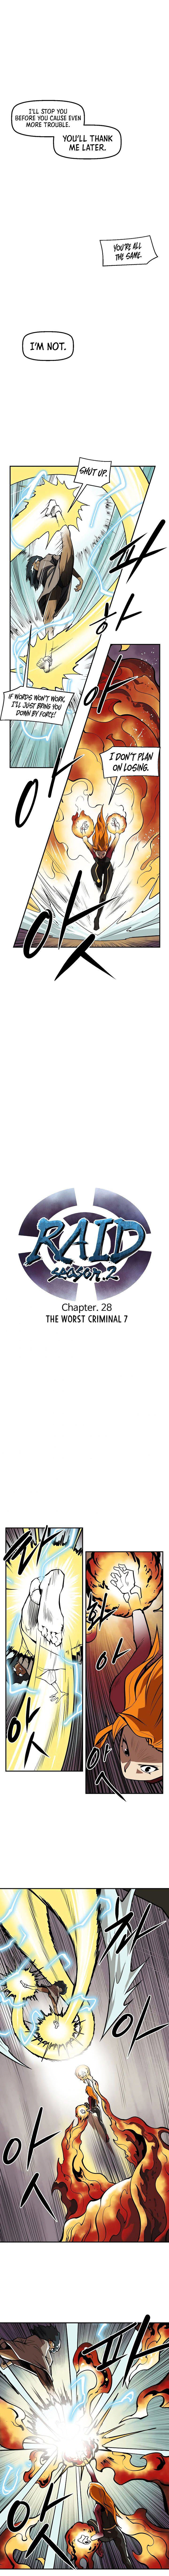 Raid Chapter 87 page 2